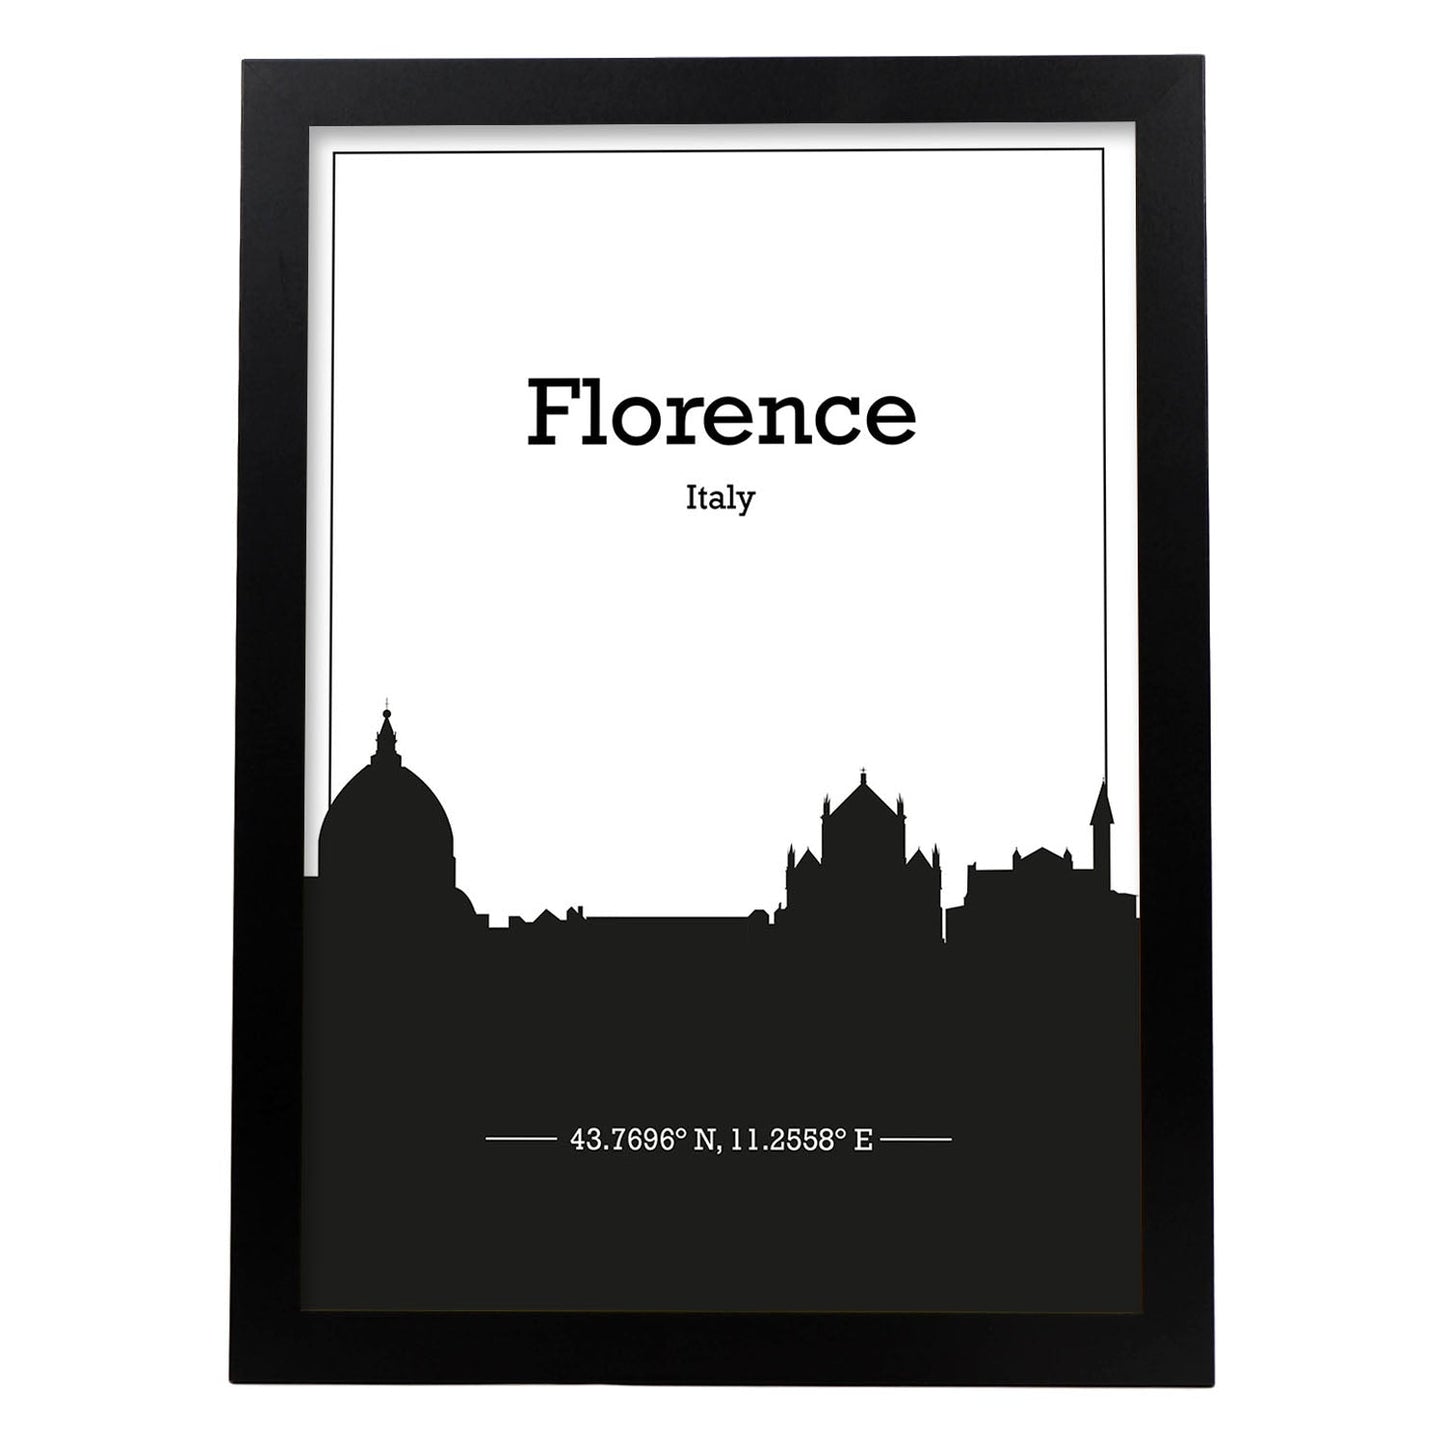 Poster con mapa de Florence - Italia. Láminas con Skyline de ciudades de Italia con sombra negra.-Artwork-Nacnic-A4-Marco Negro-Nacnic Estudio SL